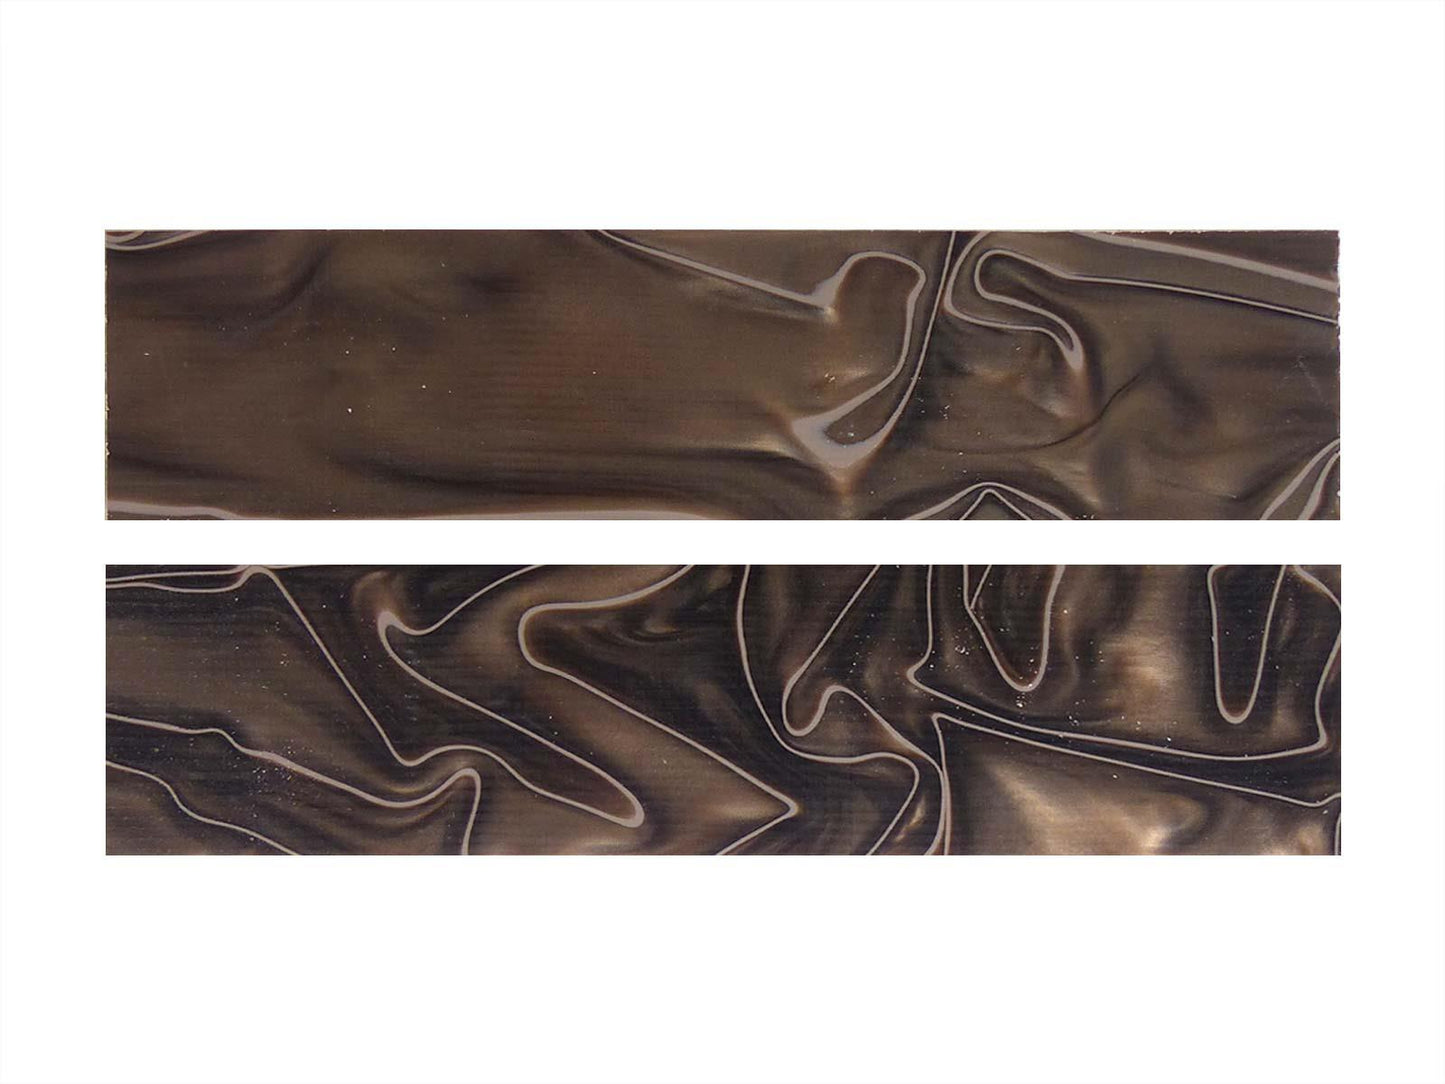 Turners' Mill Desert Camo Kirinite Acrylic Knife Scales (Pair) - 152.4x38.1x6.35mm (6x1.5x0.25")